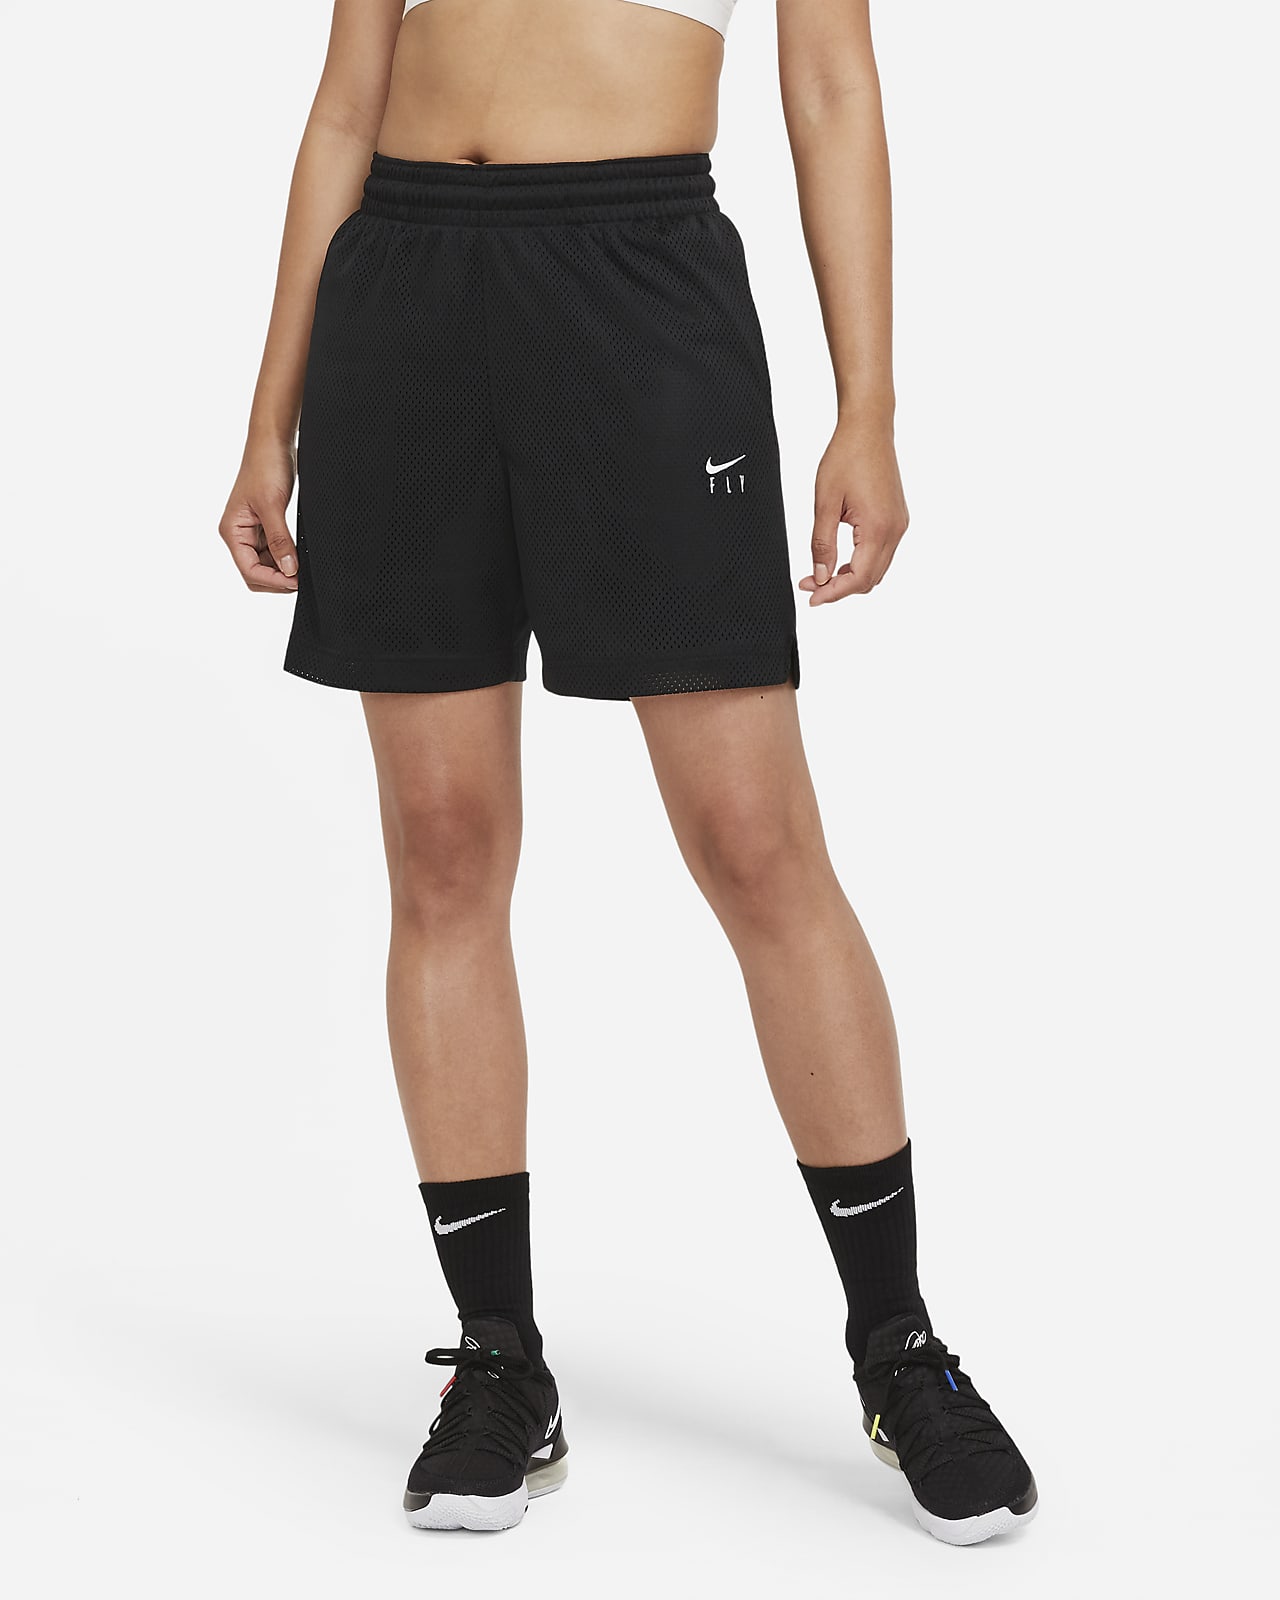 Nike Fly Women's Basketball Shorts. Nike ID